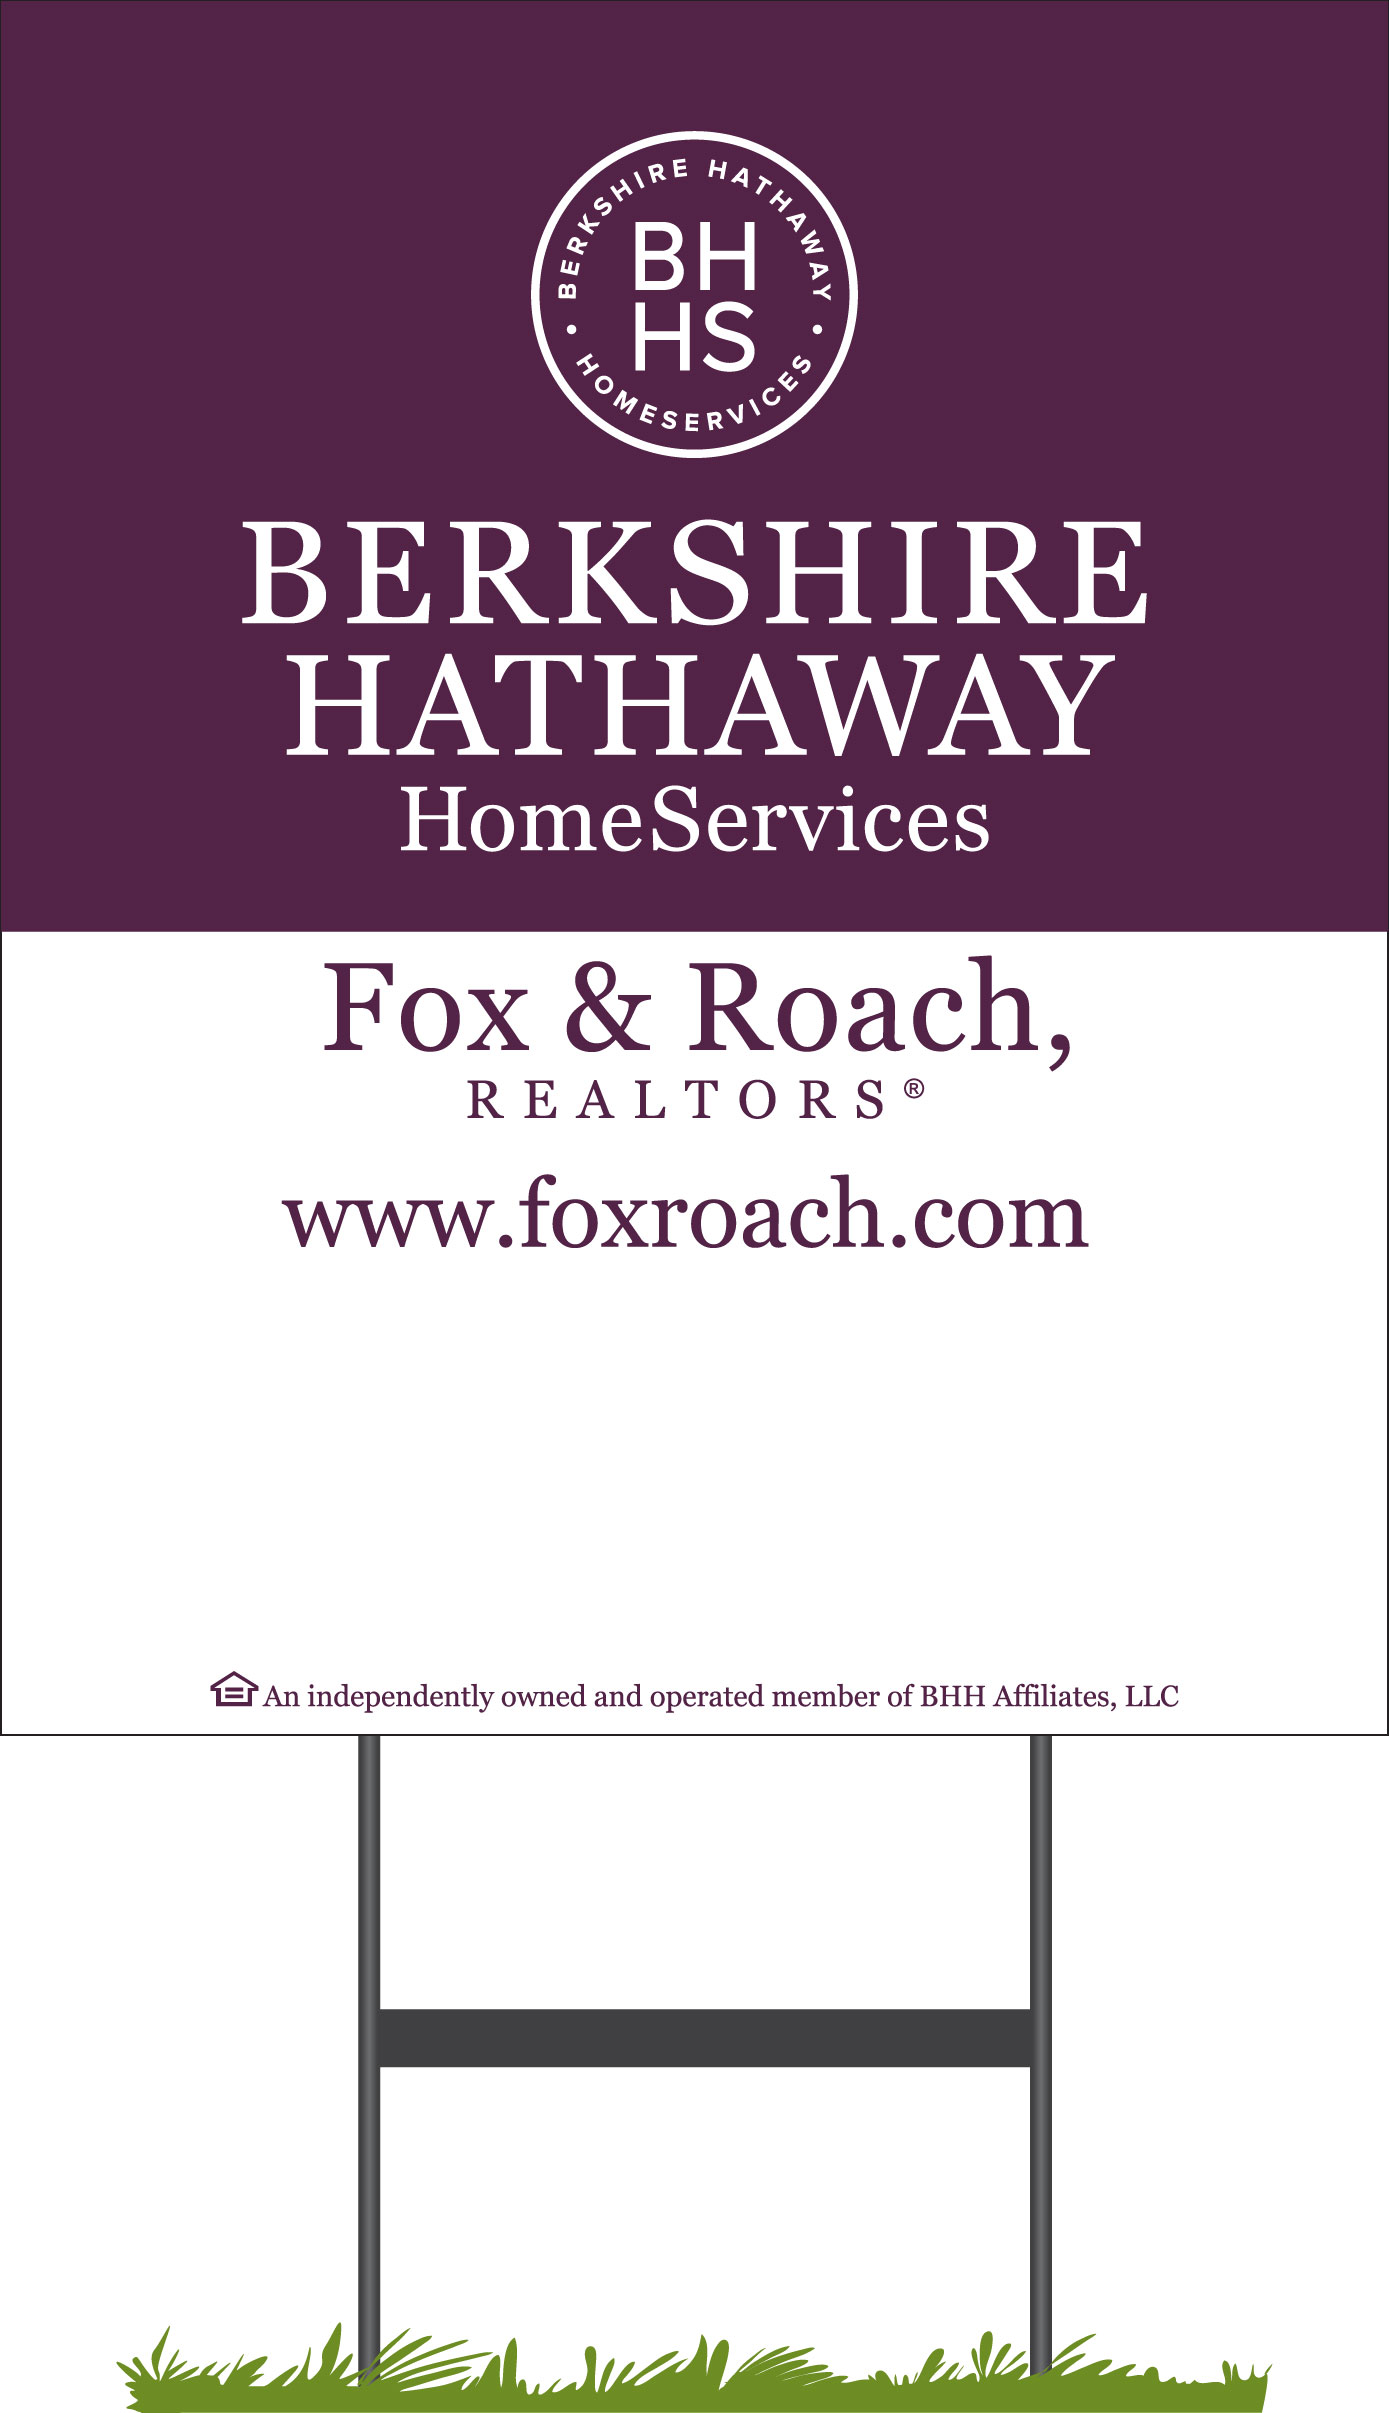 Berkshire Hathaway HomeServices Fox & Roach Realtors